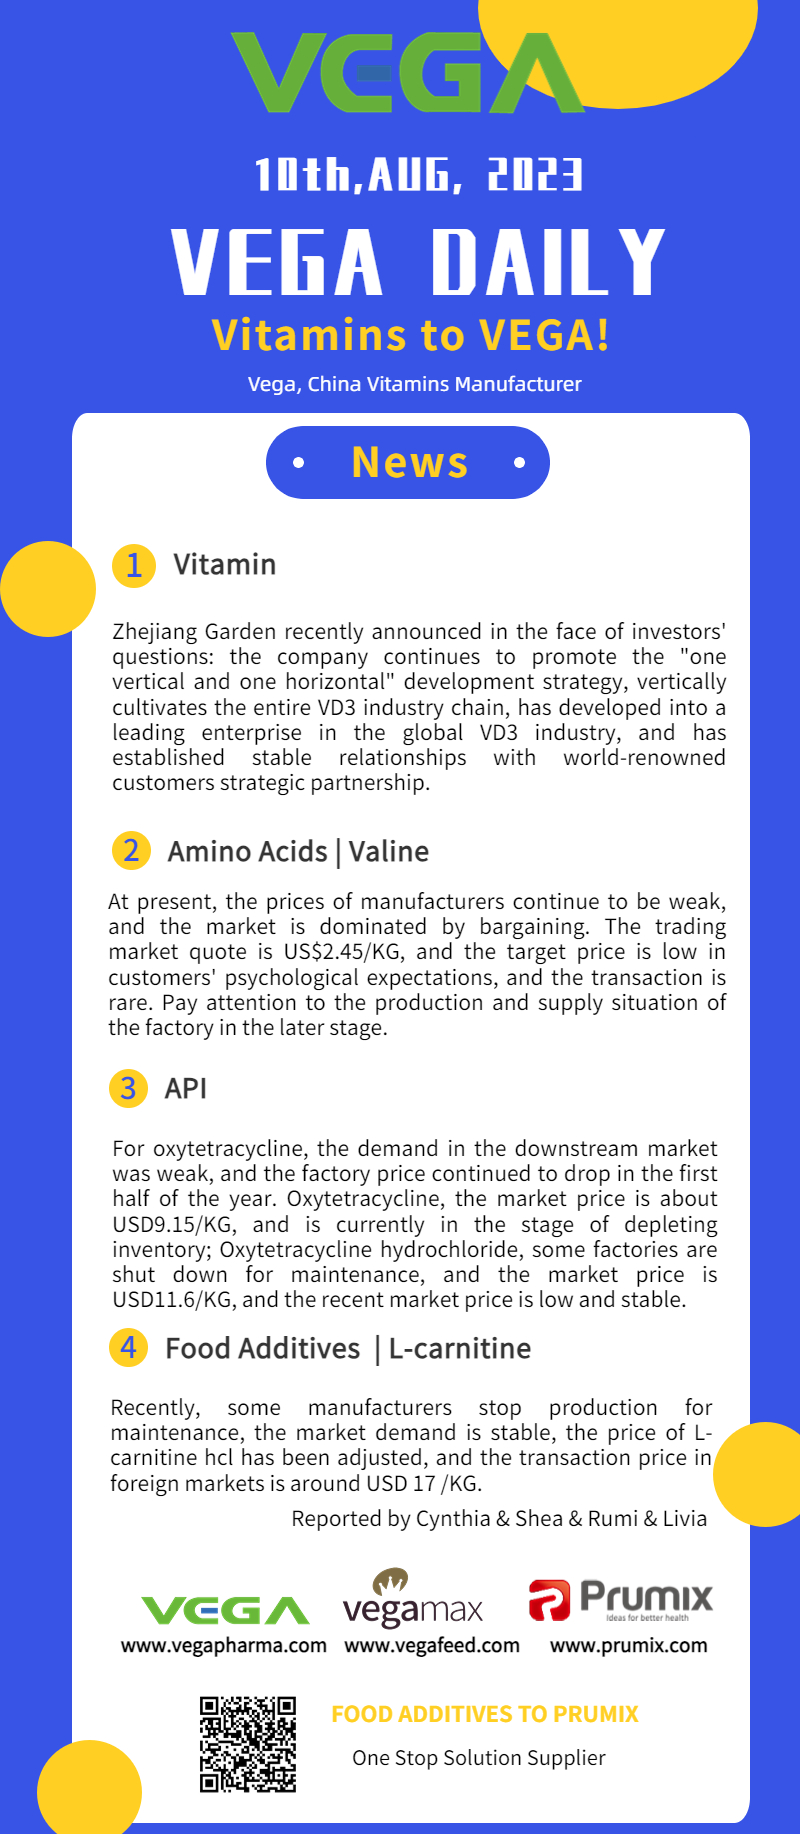 Vega Daily Dated on August  10th 2023 Vitamin Valine API L Carnitine.jpg